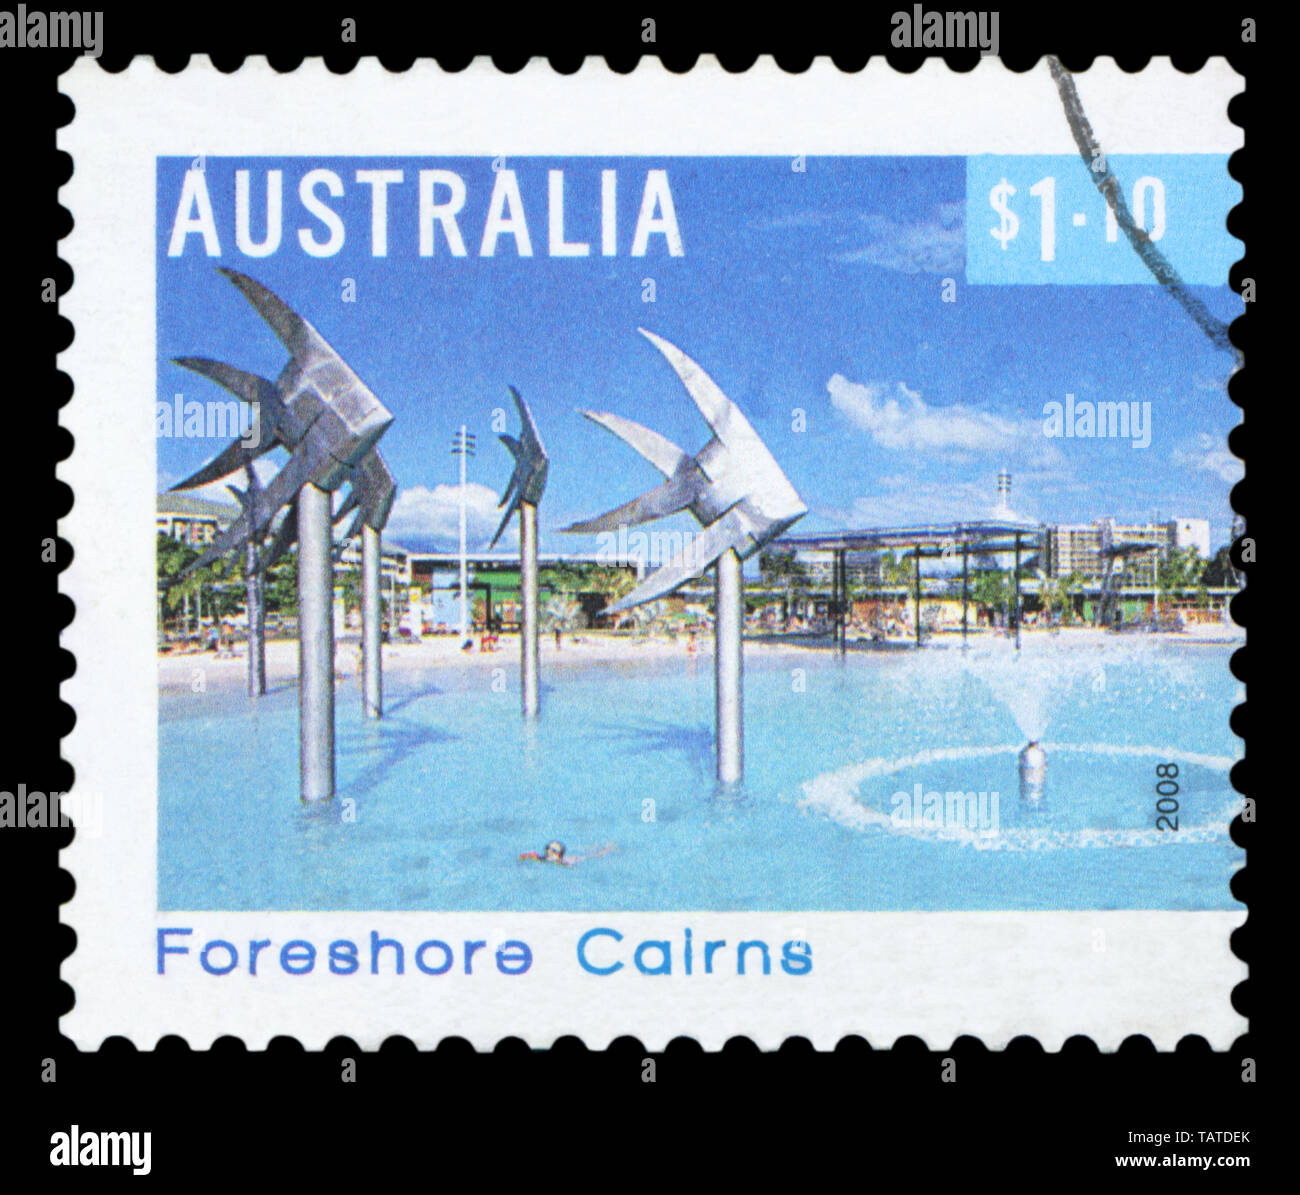 AUSTRALIA - CIRCA 2008: A Stamp printed in AUSTRALIA shows the Foreshore Cairns, Queensland, Australia, circa 2008. Stock Photo